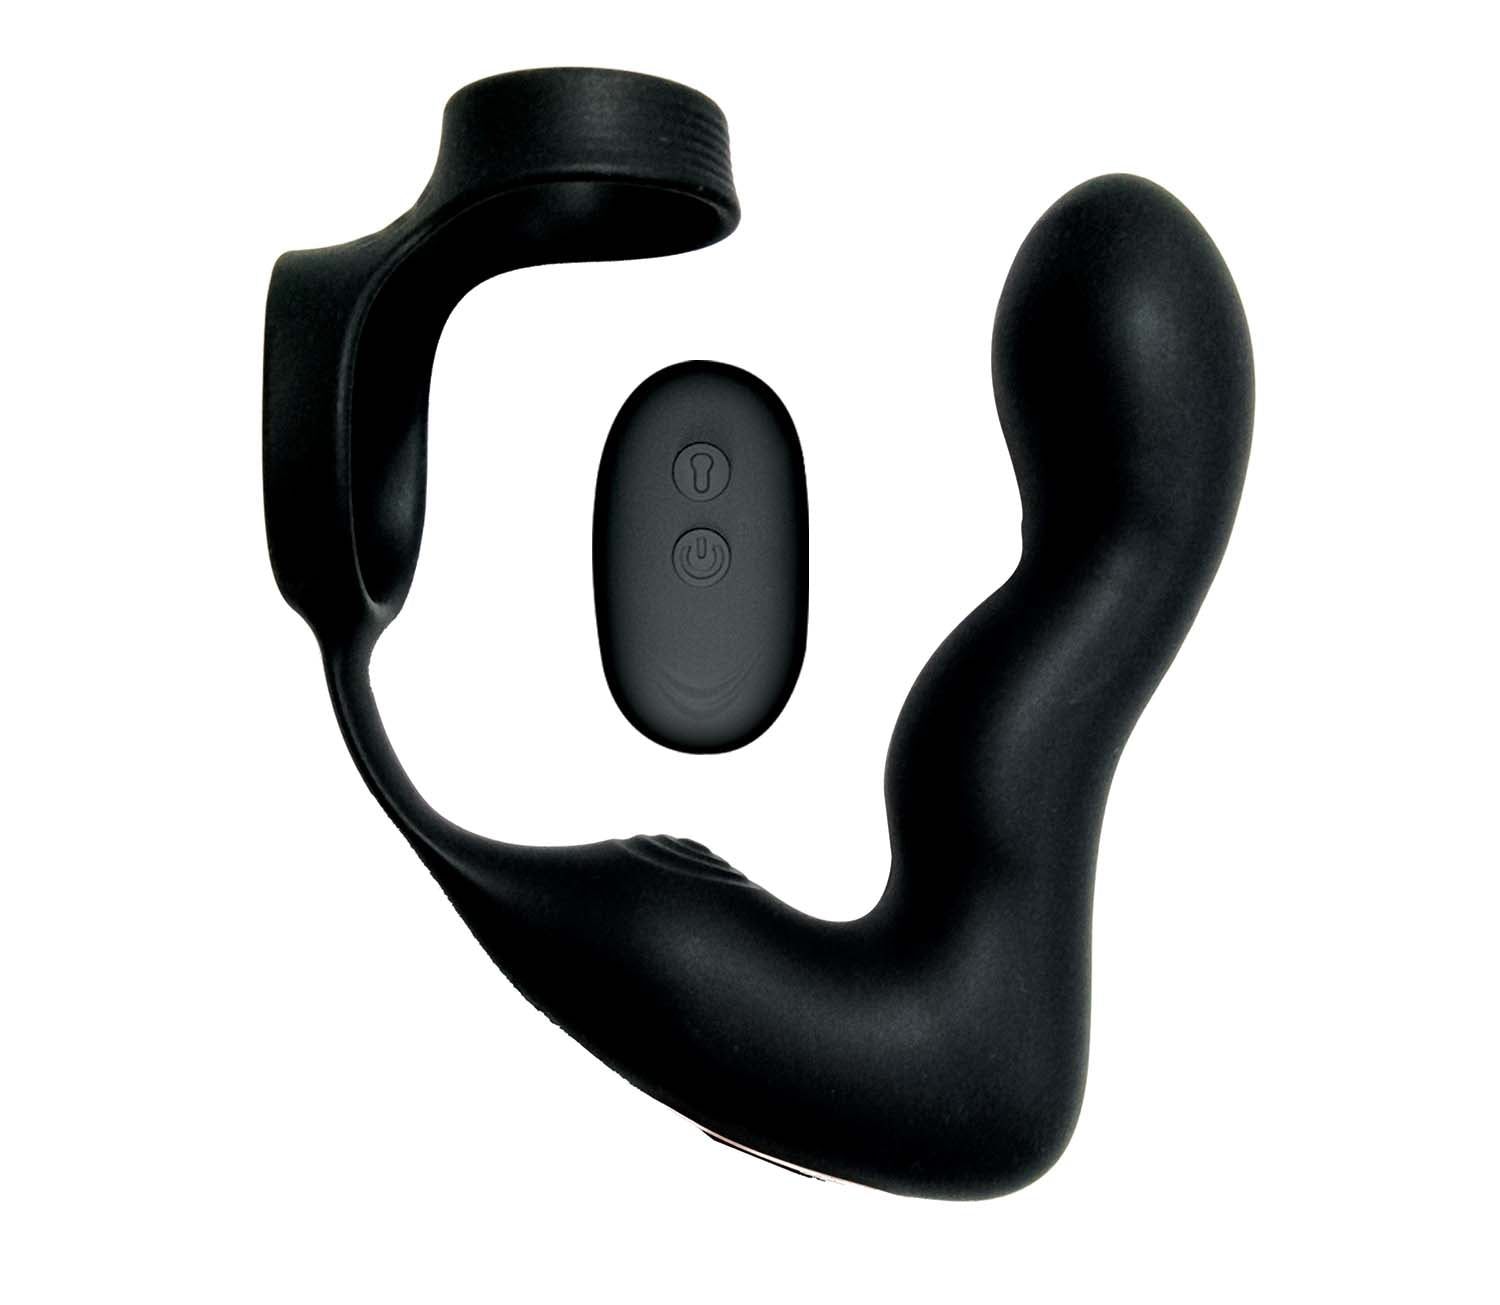 Atomic Inflatable P-Spot Vibe - Black | CheapLubes.com